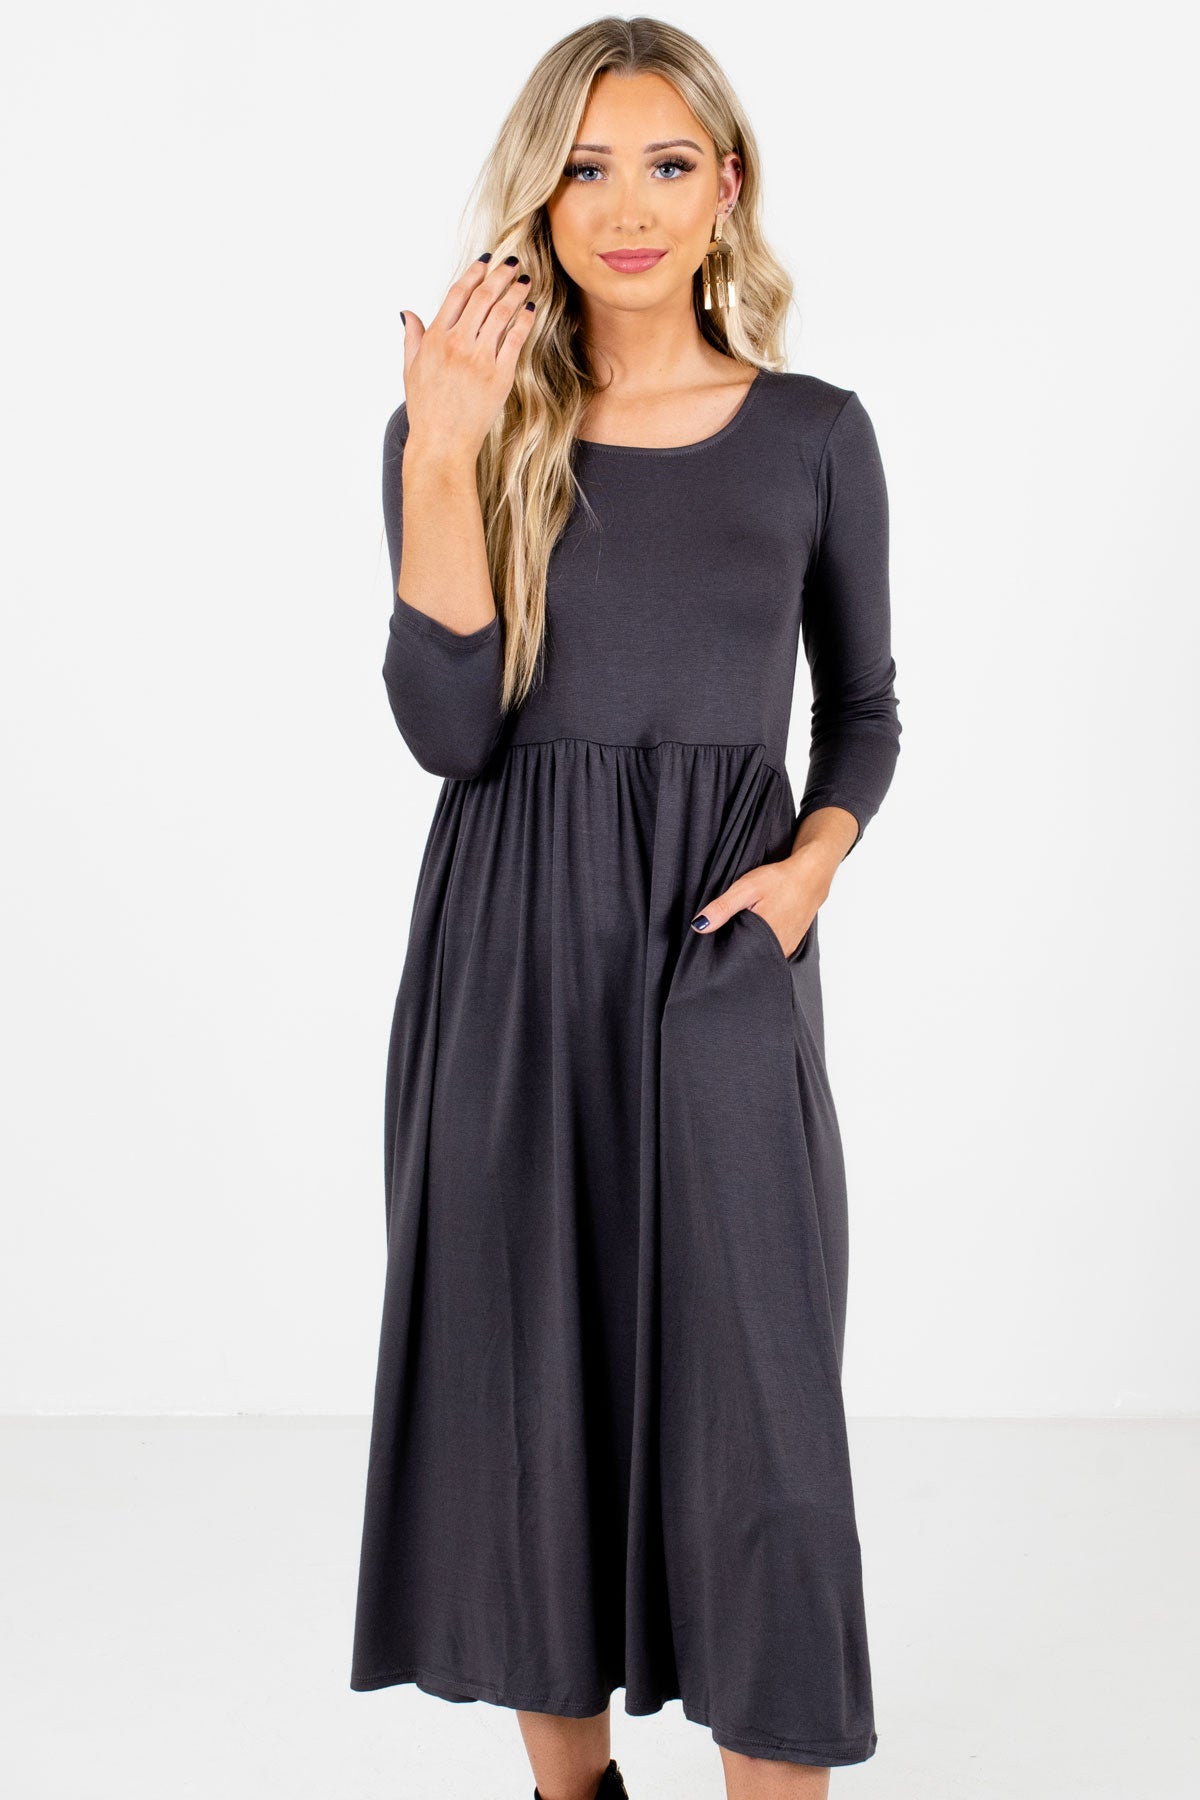 Gray ¾ Length Sleeve Boutique Midi Dresses for Women